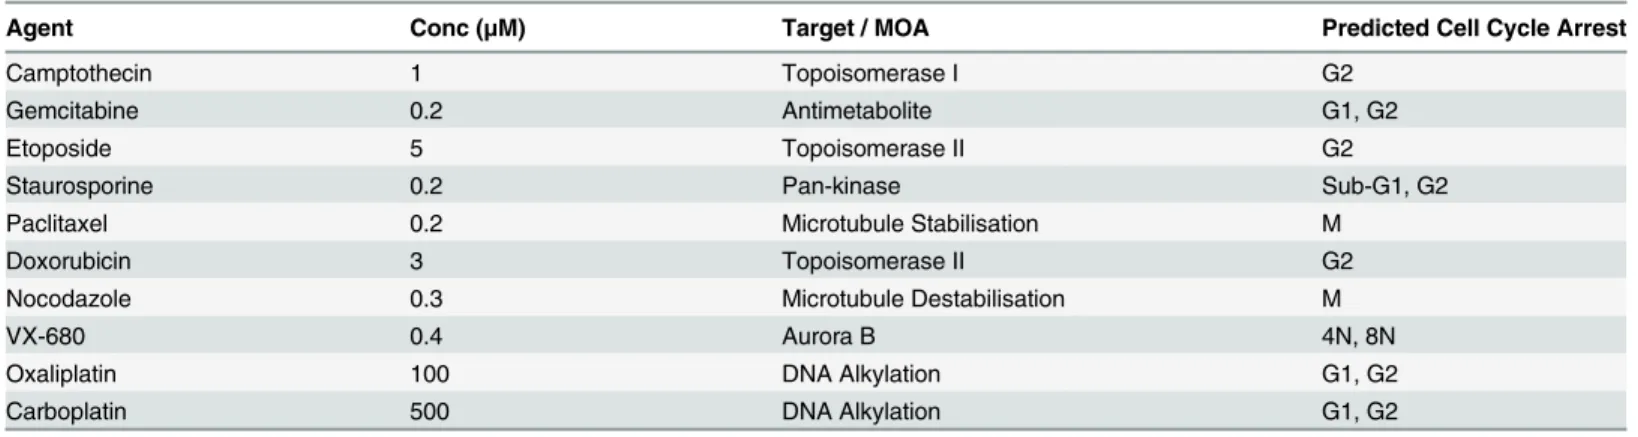 Table 1. Agents used to validate image analysis methodology.